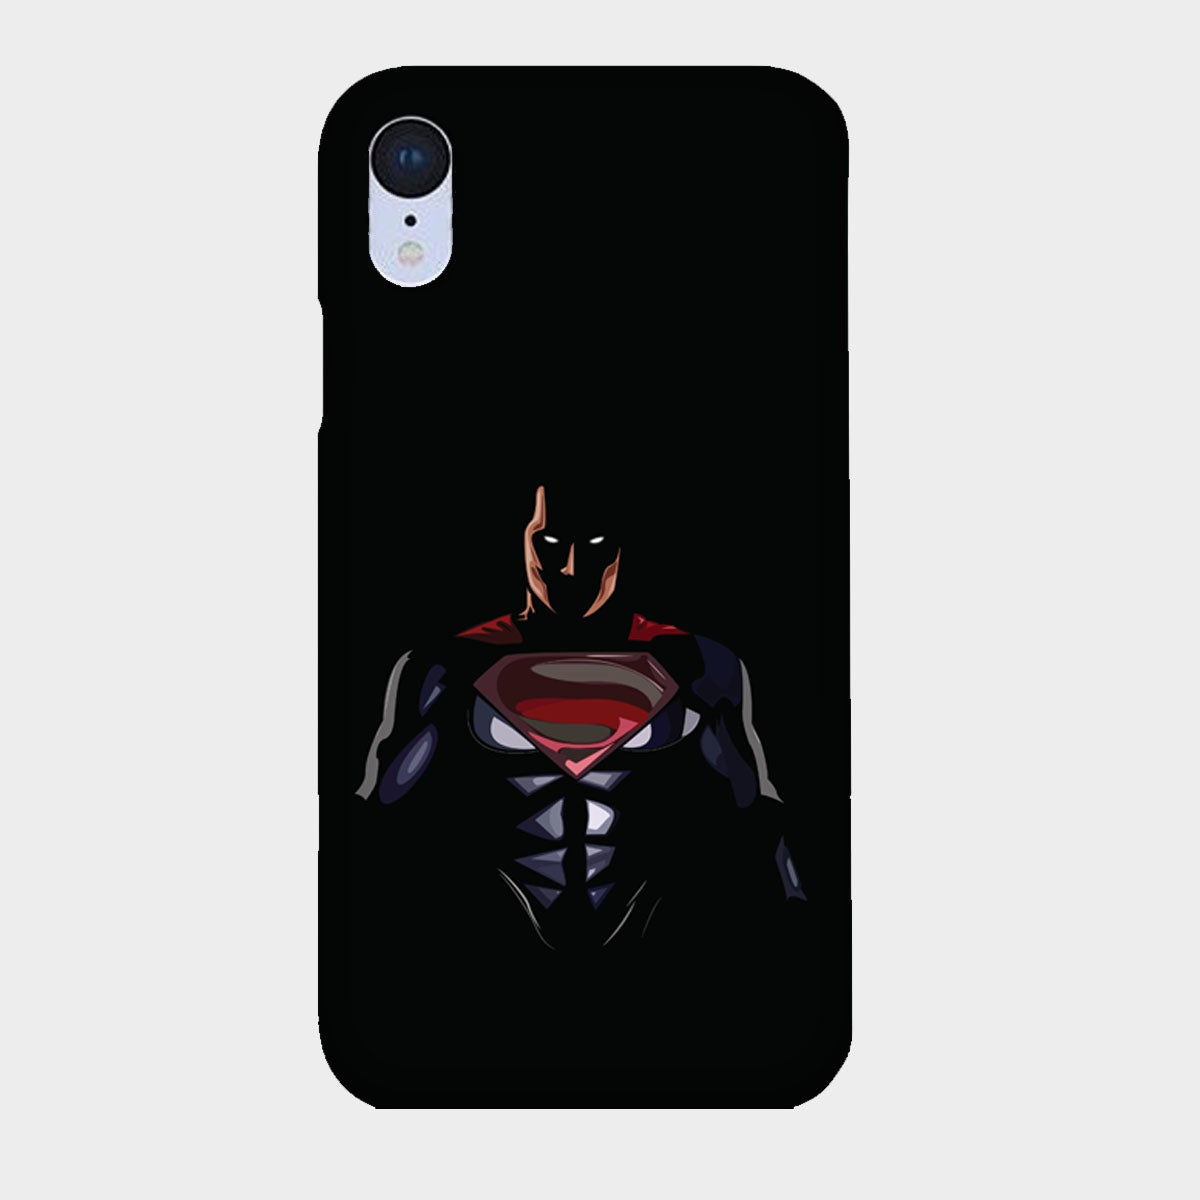 Superman - Man of Steel - Minimalist - Mobile Phone Cover - Hard Case